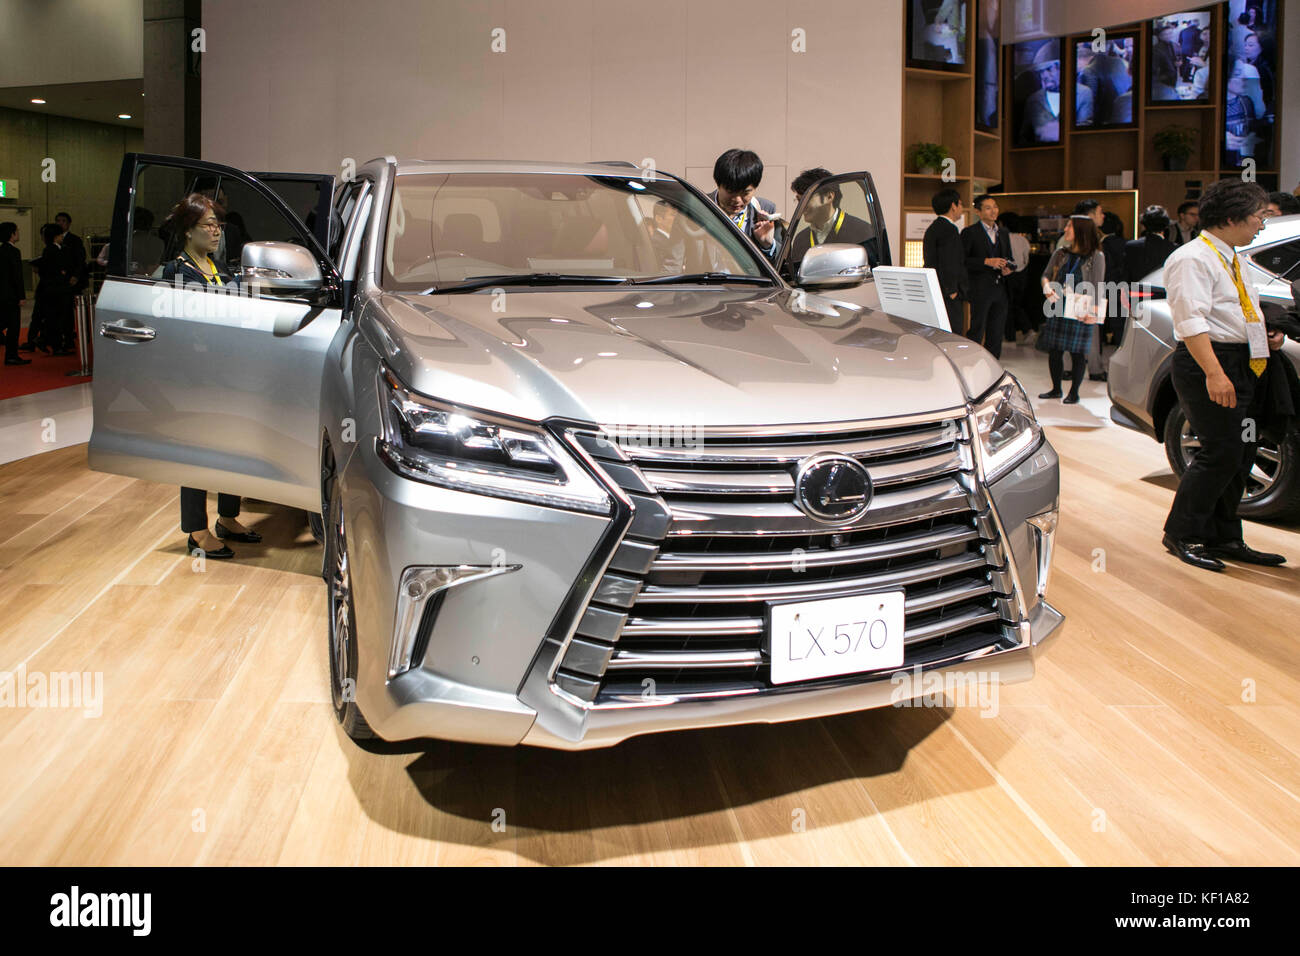 Lexus presents its new concept cars at 45th Tokyo Motor Show. Credit: Yuichiro Tashiro /Alamy Live News Stock Photo